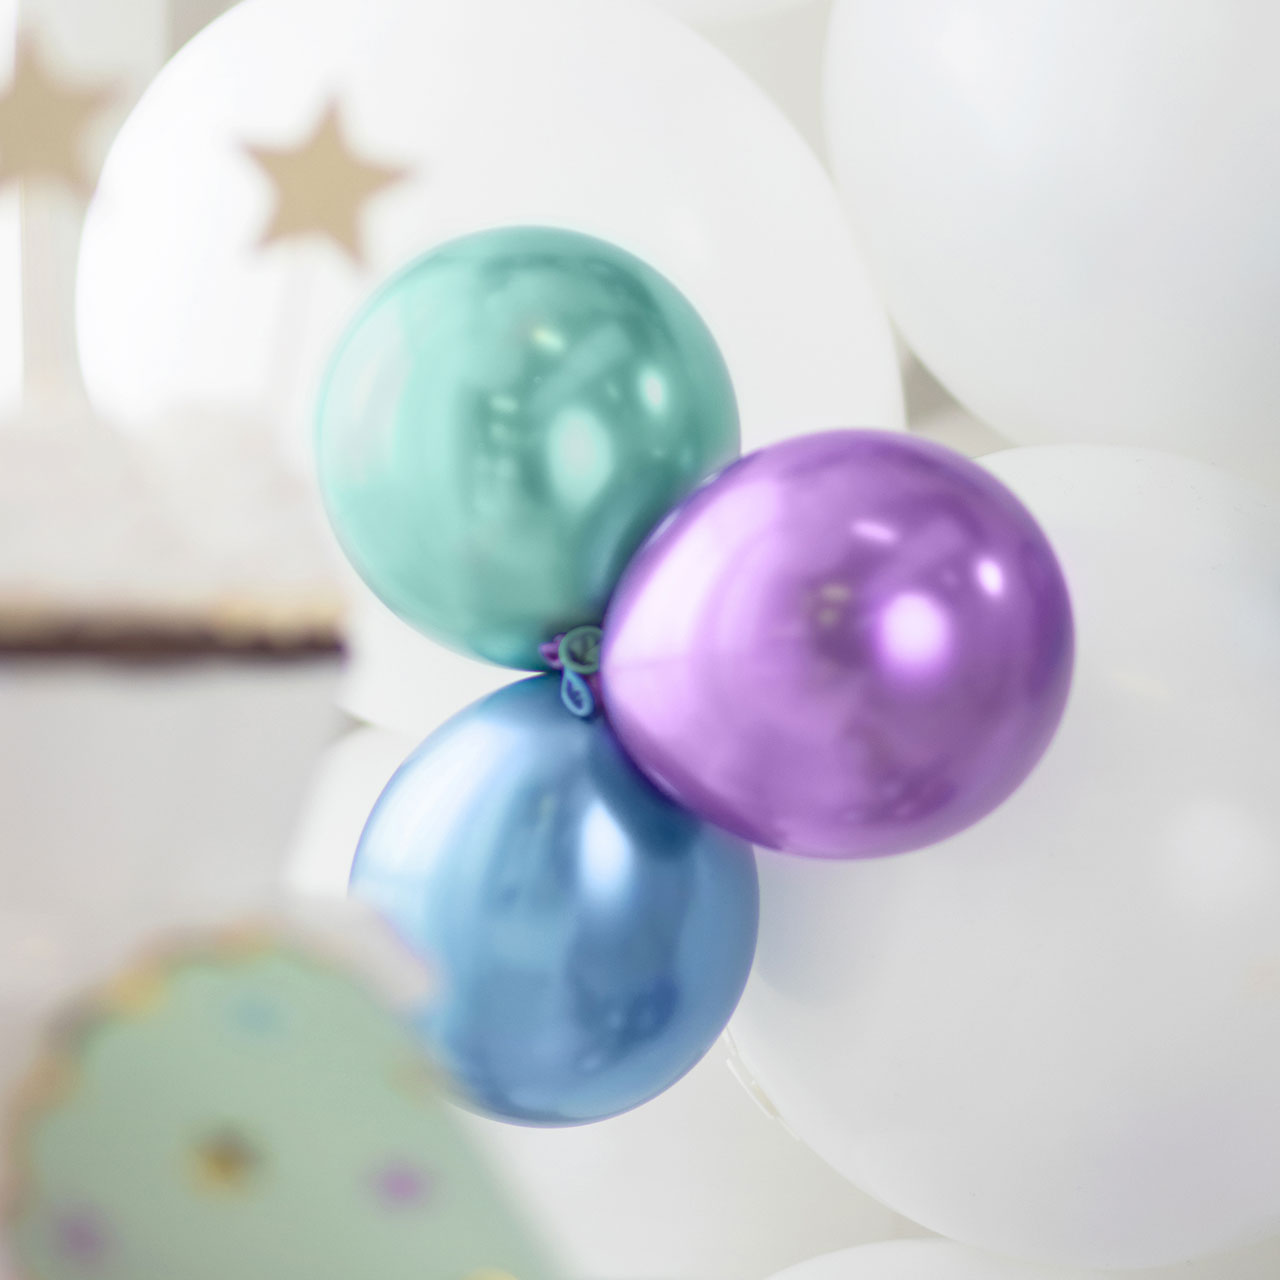 10 Mini Glossy Purple Balloons